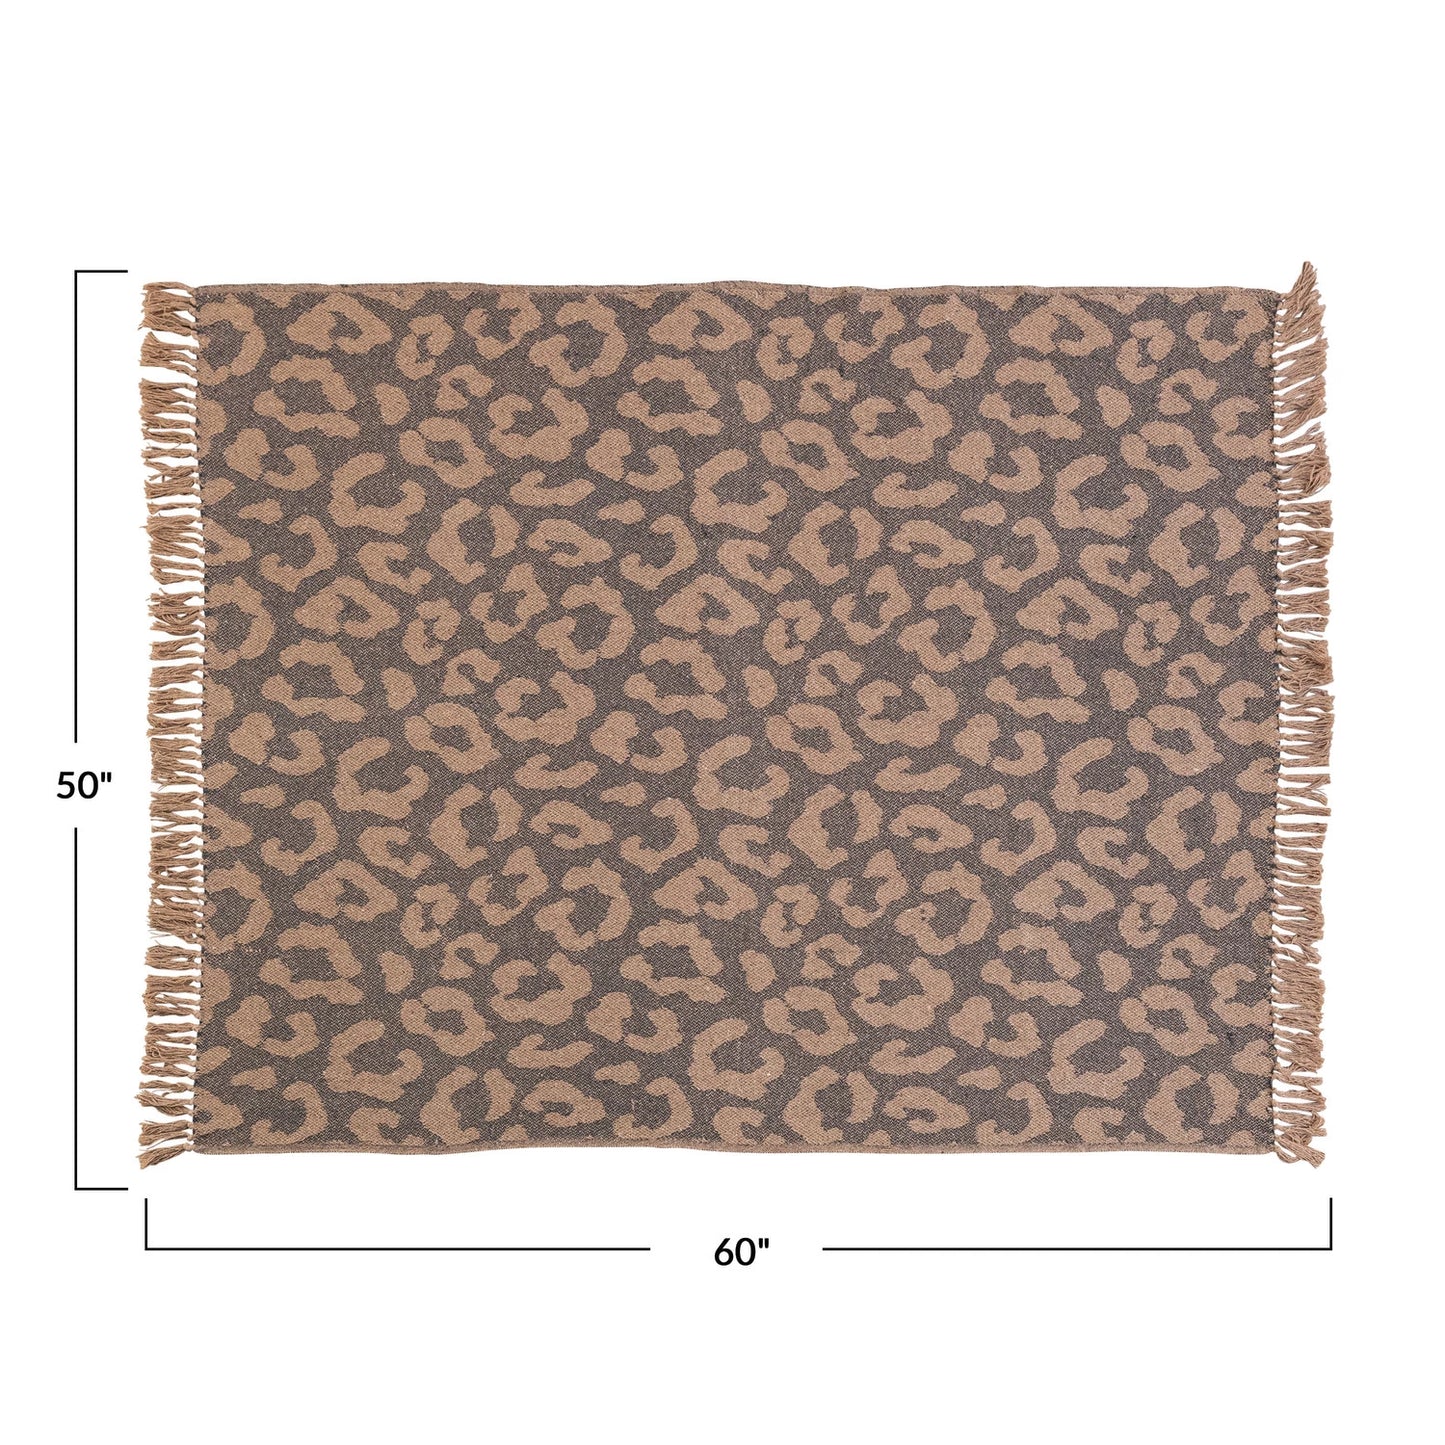 60"L x 50"W Woven Recycled Cotton Blend Leopard Print Throw w/ Fringe | Black & Tan